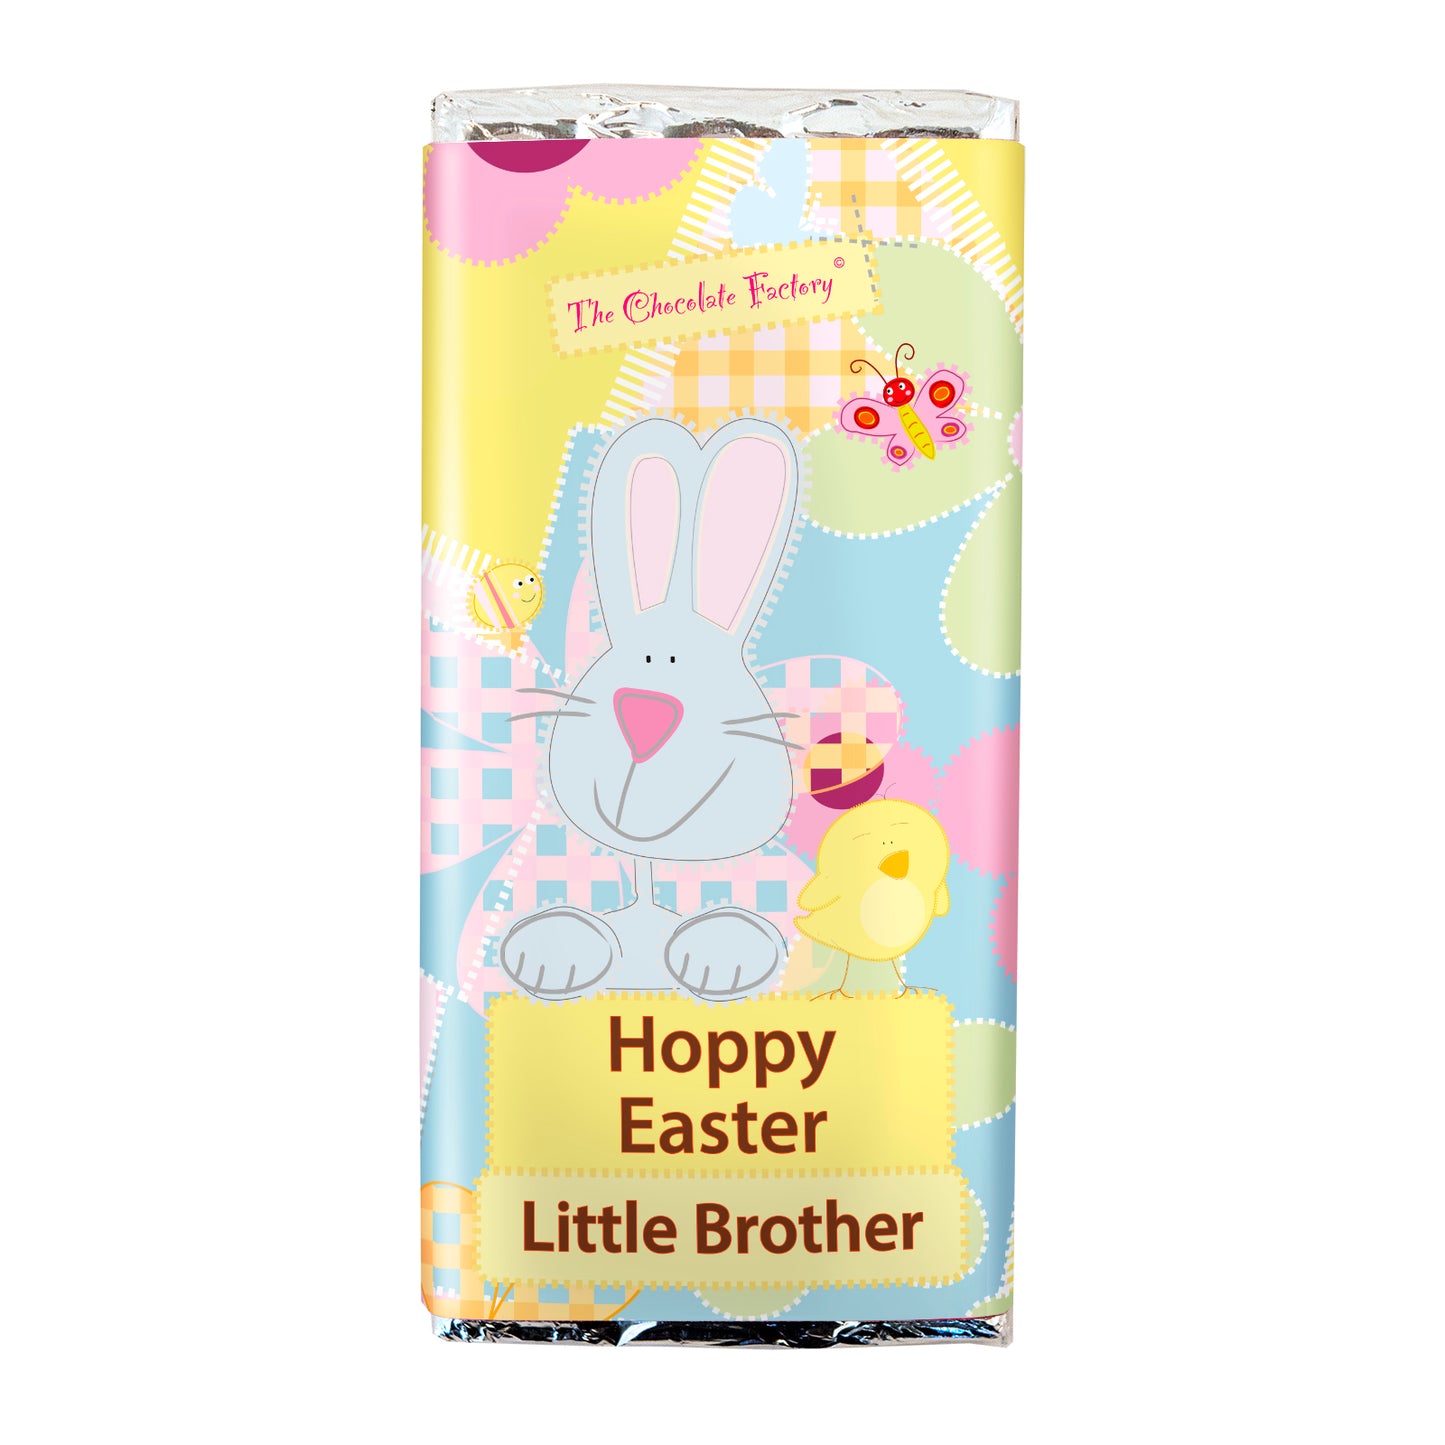 Hoppy Easter Little Brother Chocolate Bar